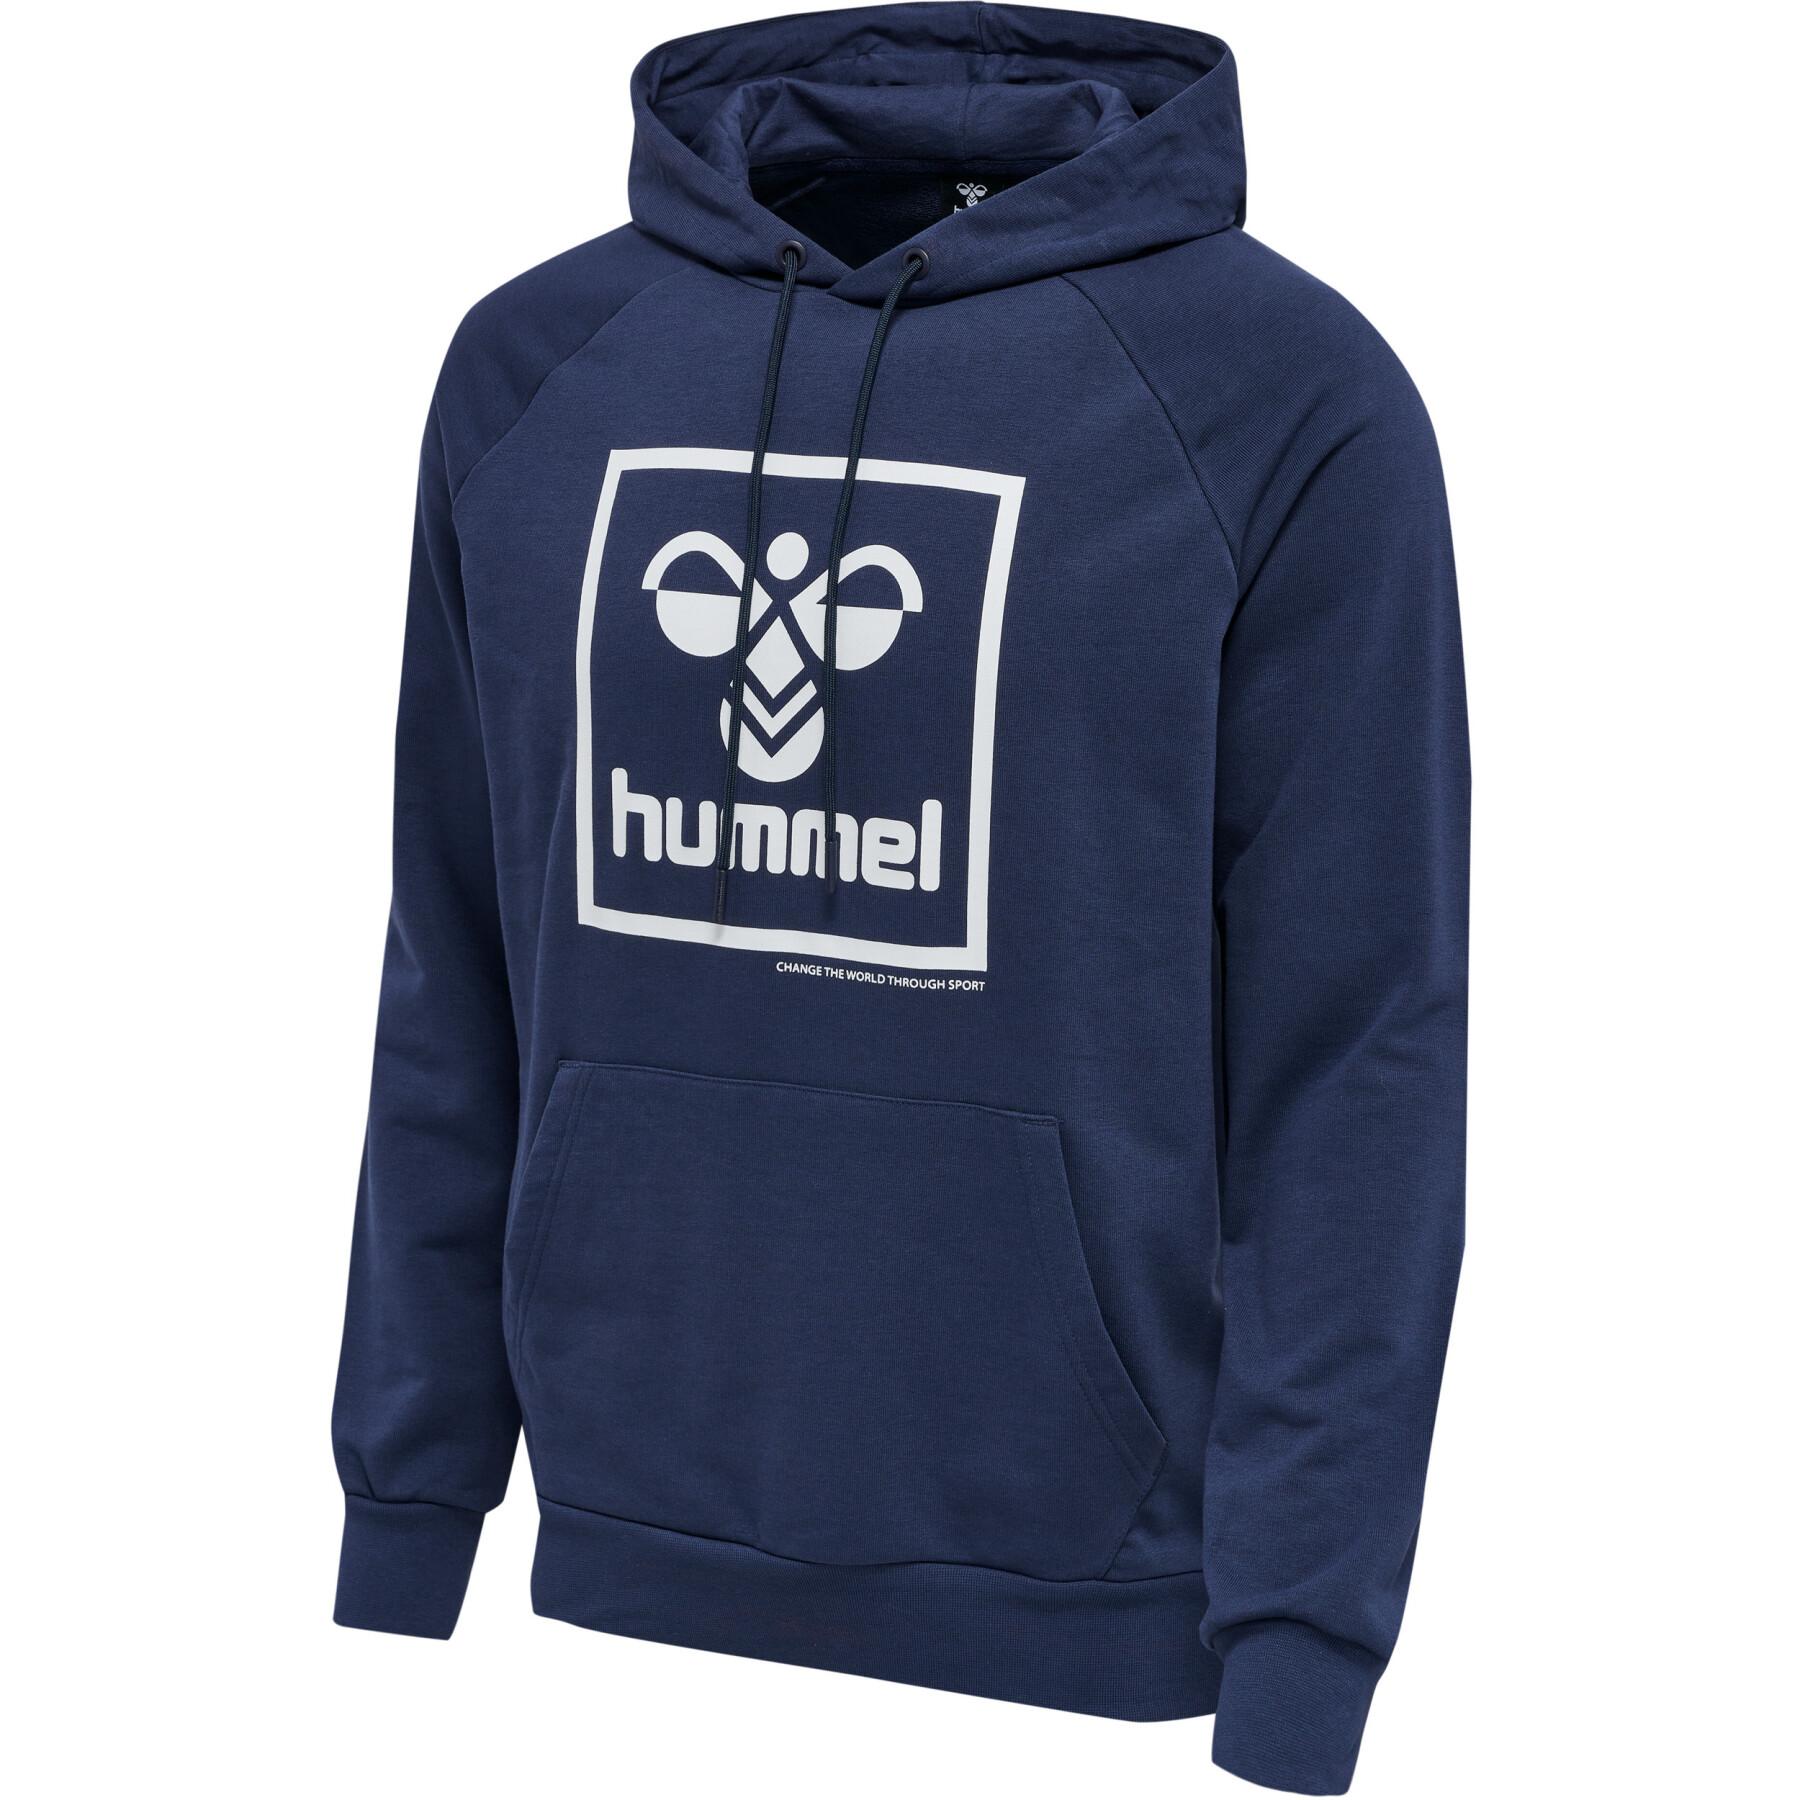 Hooded sweatshirt Hummel Isam 2.0 - - Brands - Lifestyle